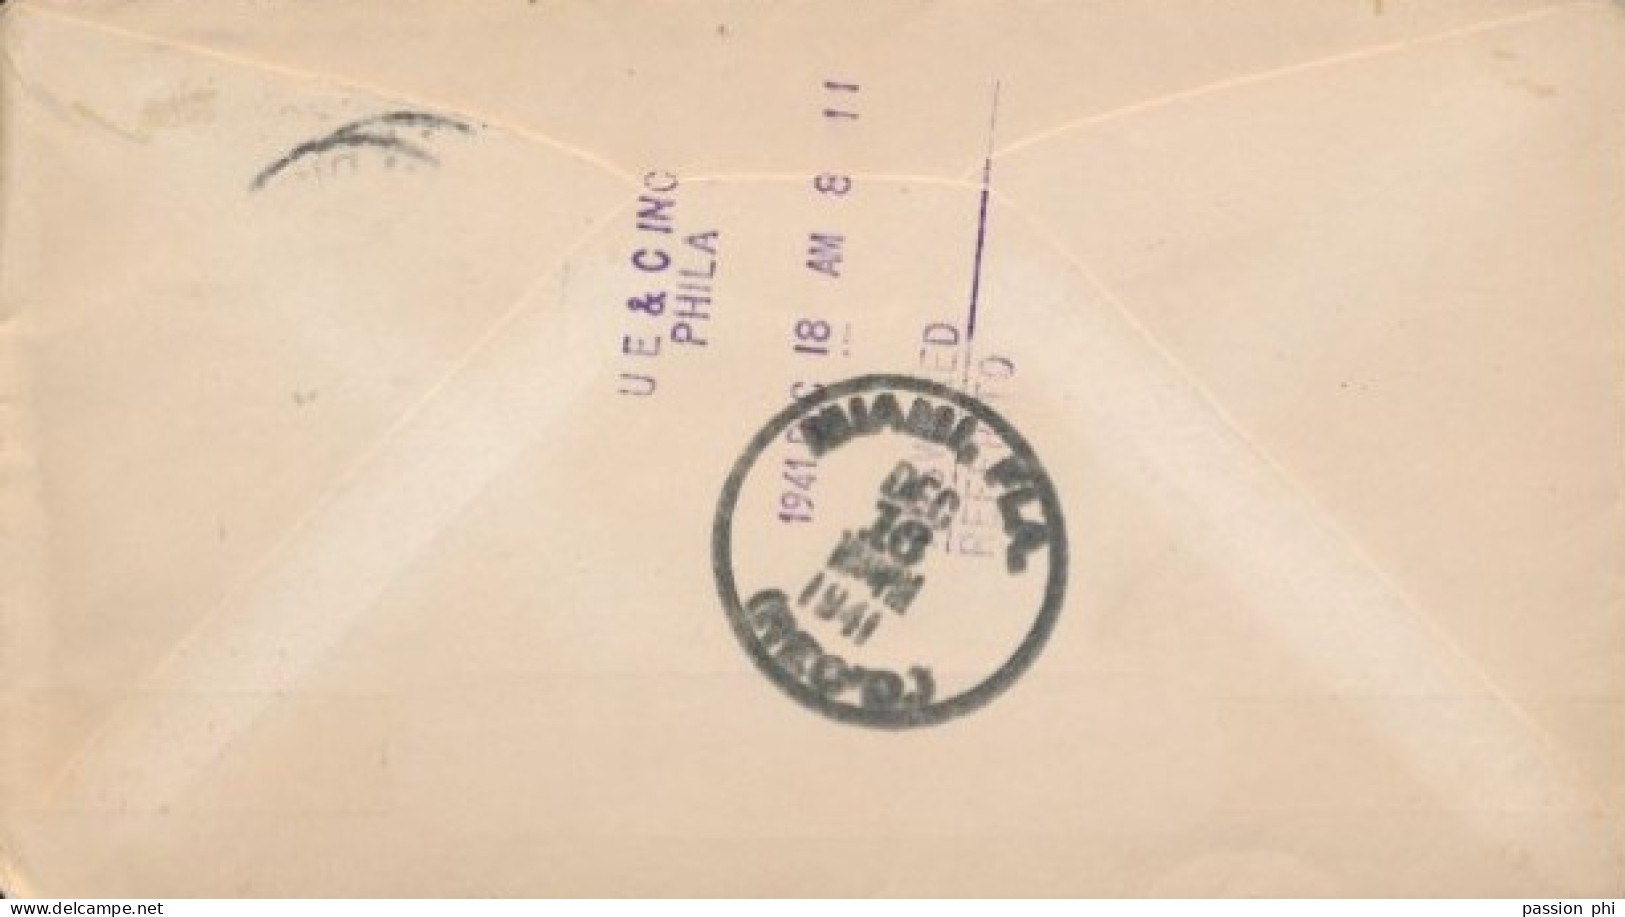 BELGIAN CONGO PREMIER VOL DECEMBRE 1941 DE LEO. VERS LES USA - Briefe U. Dokumente